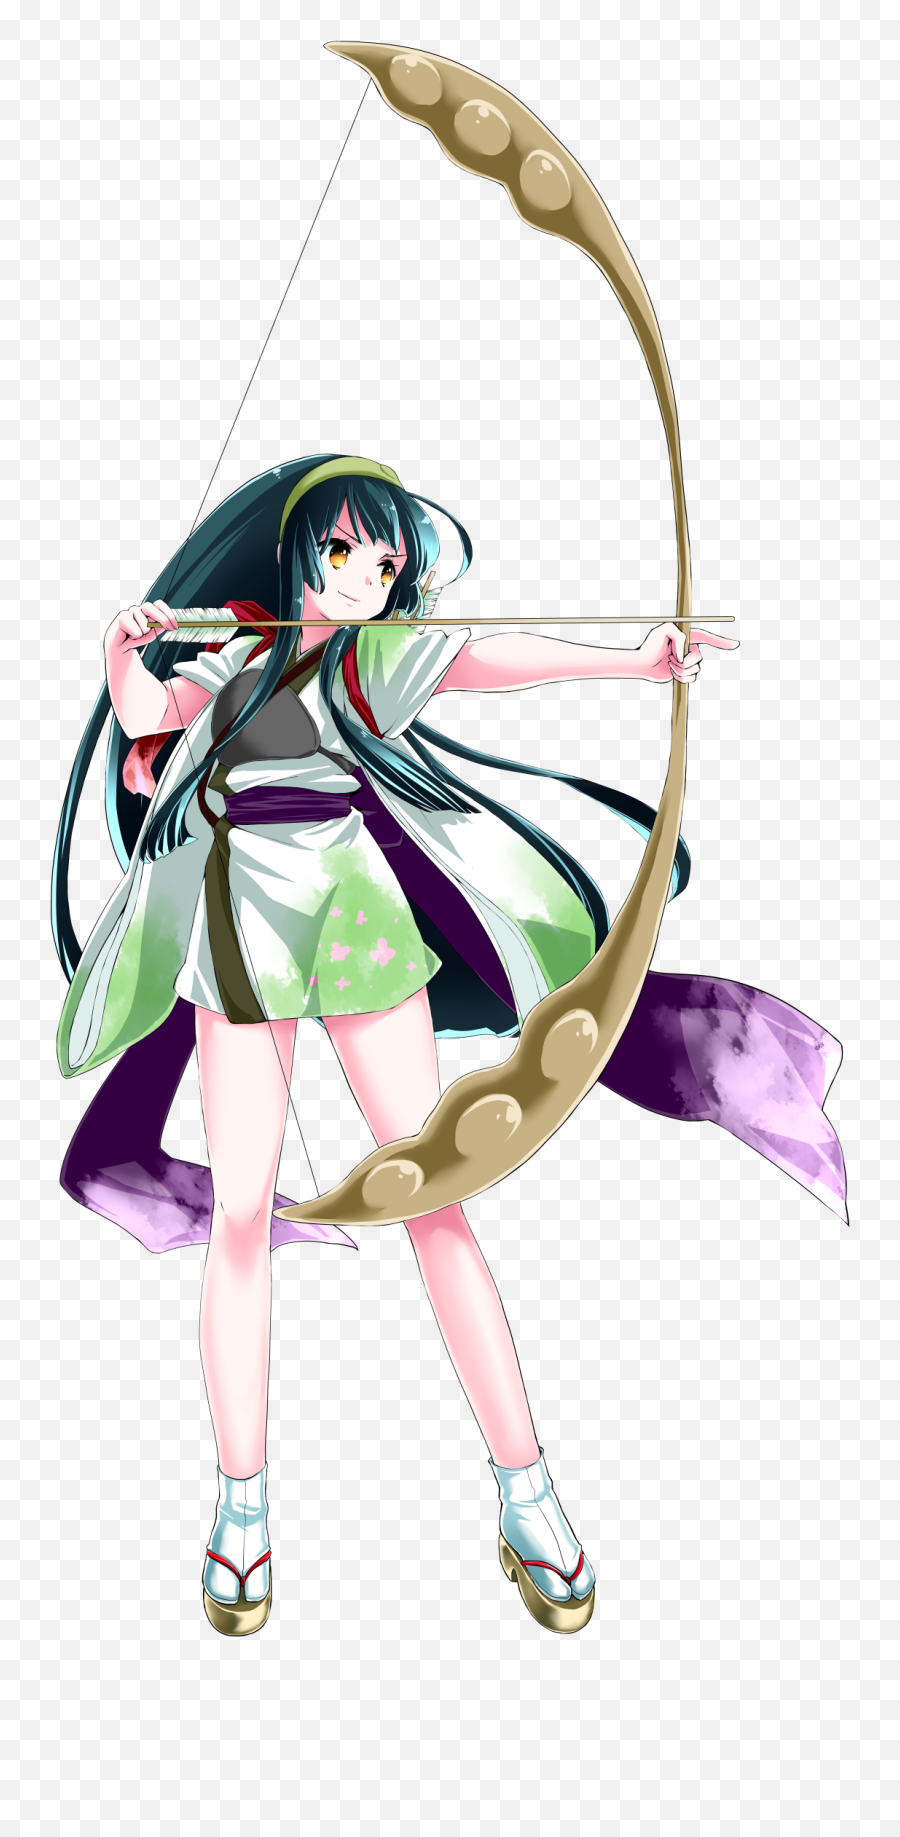 Anime style illustrations of cute archery girls - Stock Illustration  [69887952] - PIXTA